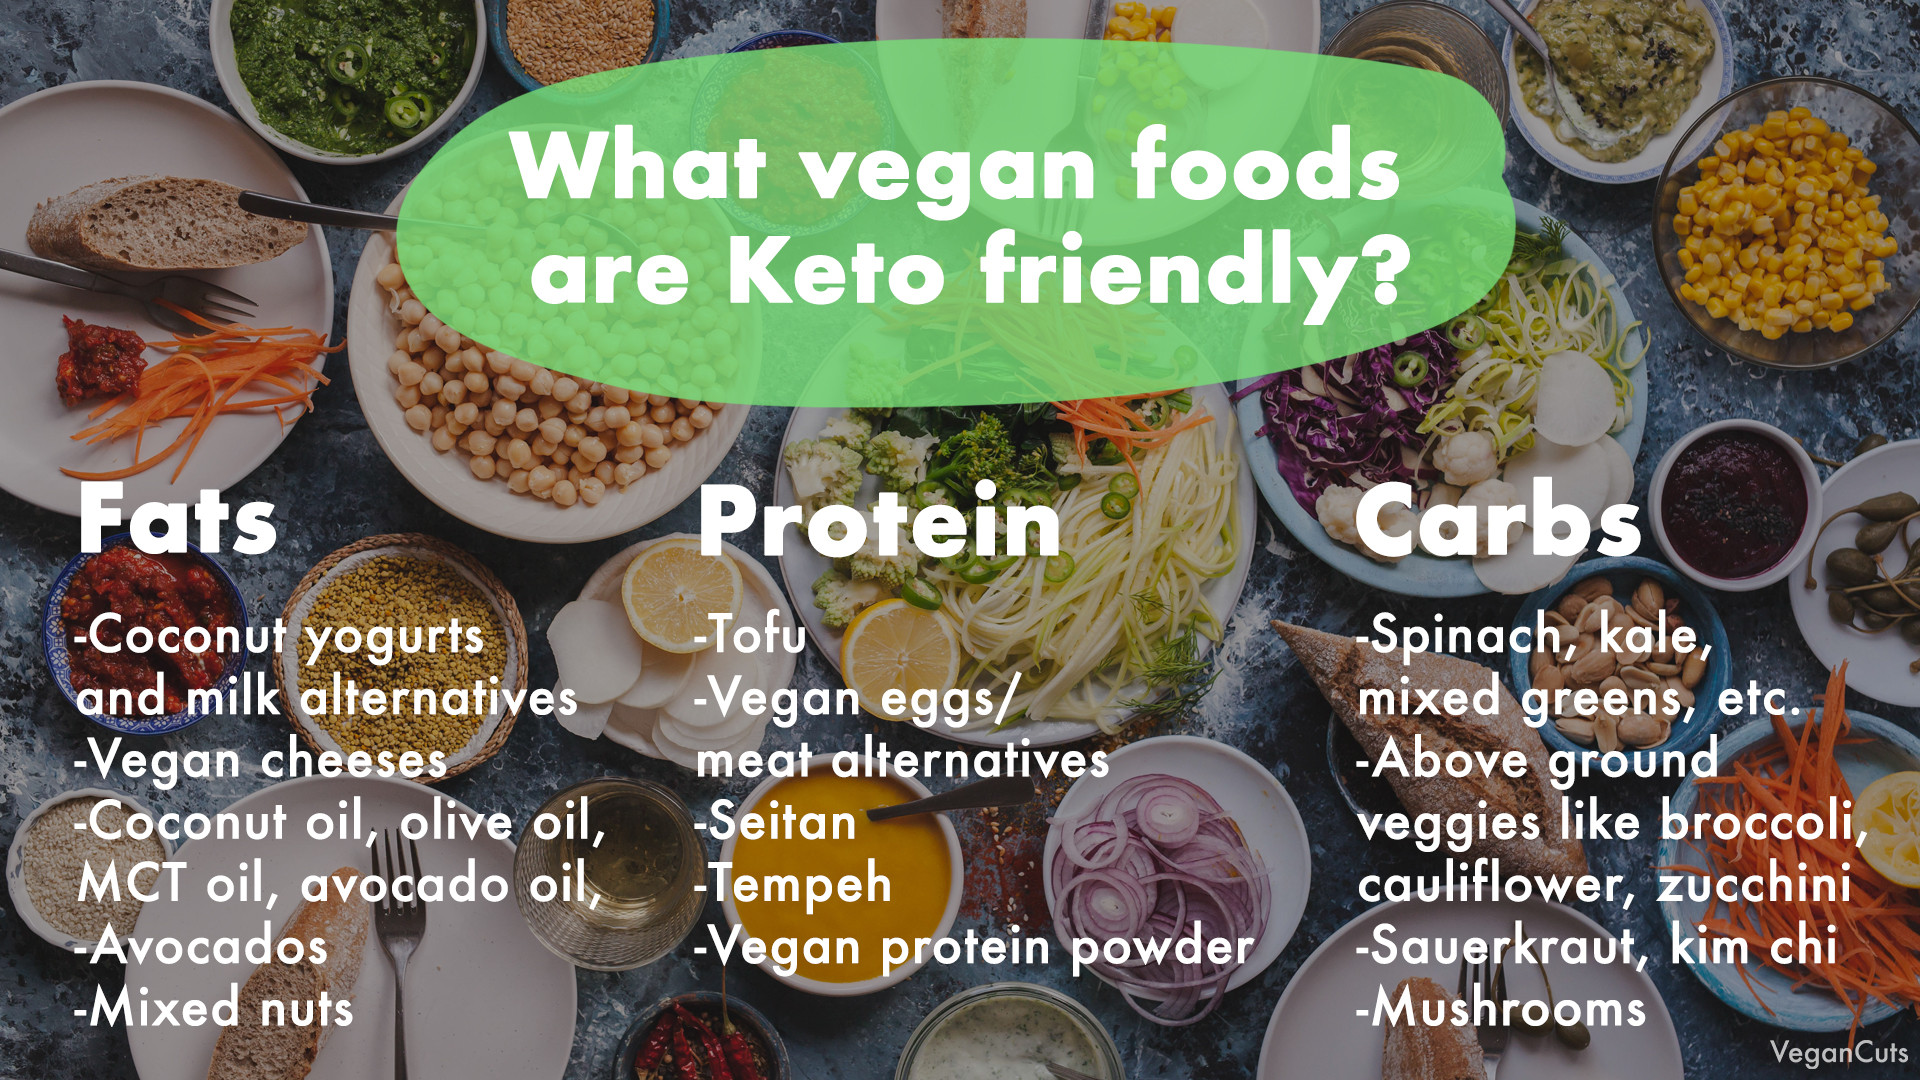 Keto Diet Food List Vegan The Vegan Keto Diet Explained Vegan Cuts